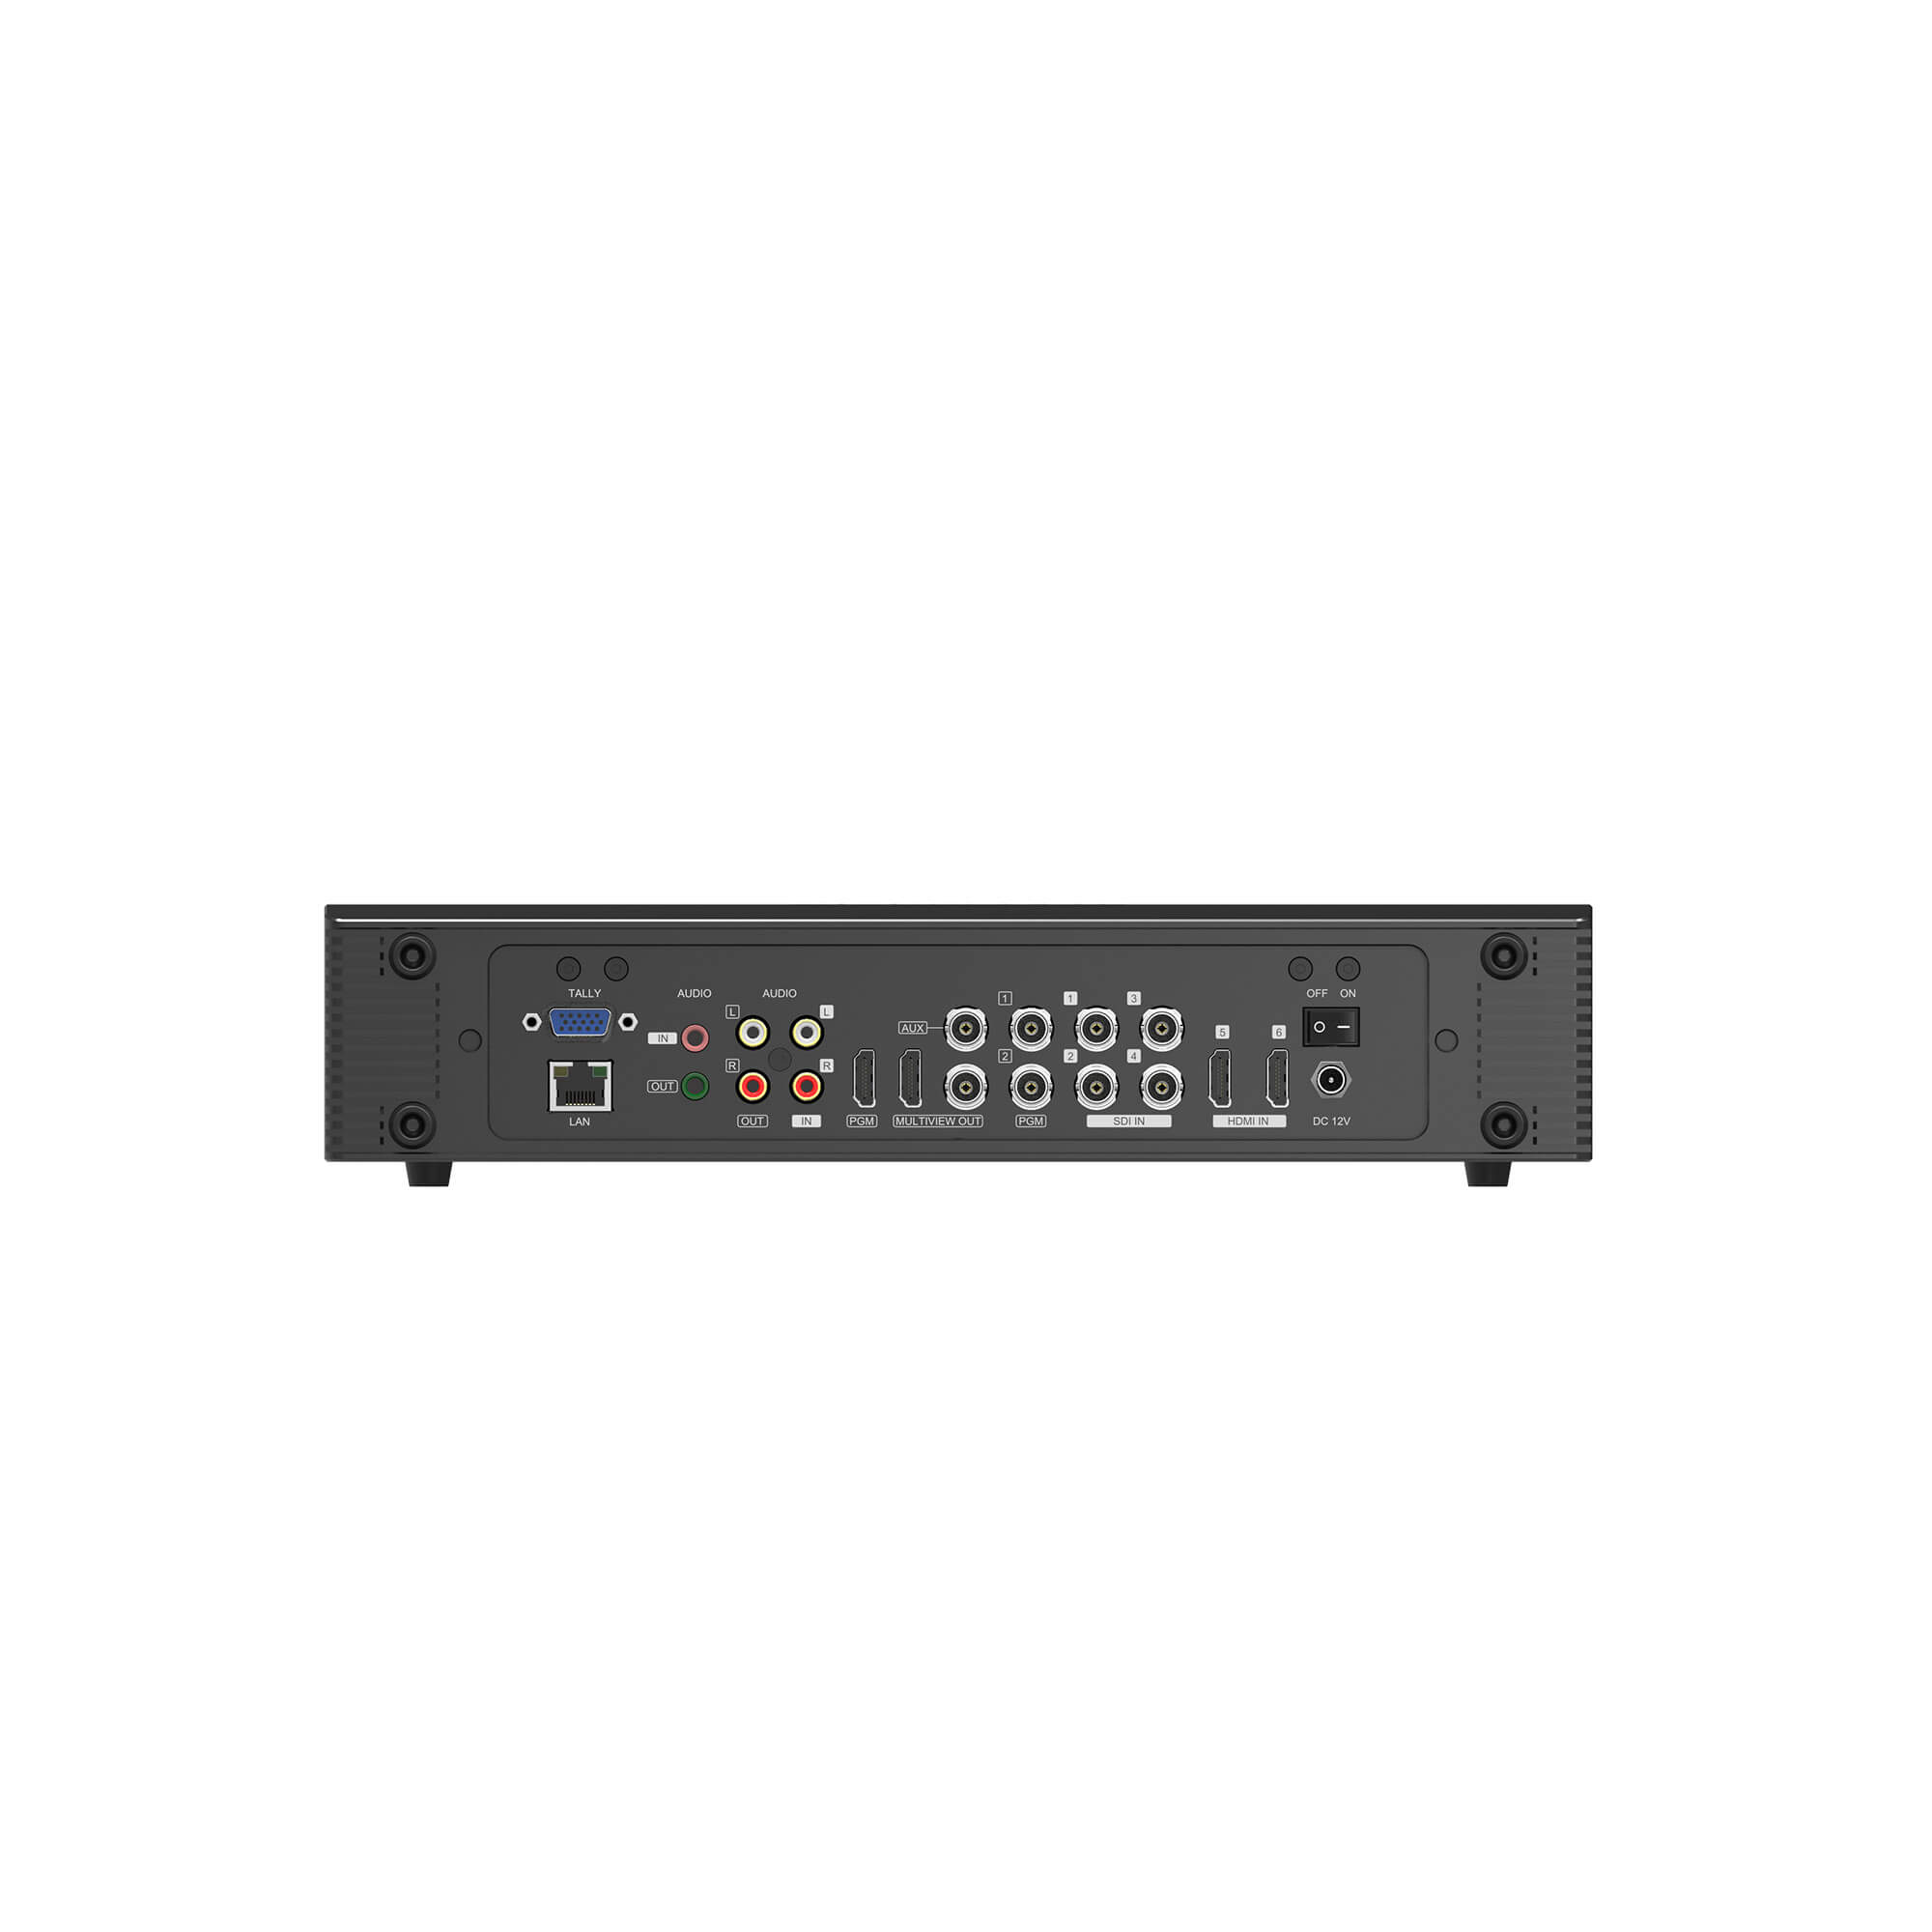 PVS0613 - Portable 6CH SDI/HDMI Video Switcher - AVMATRIX